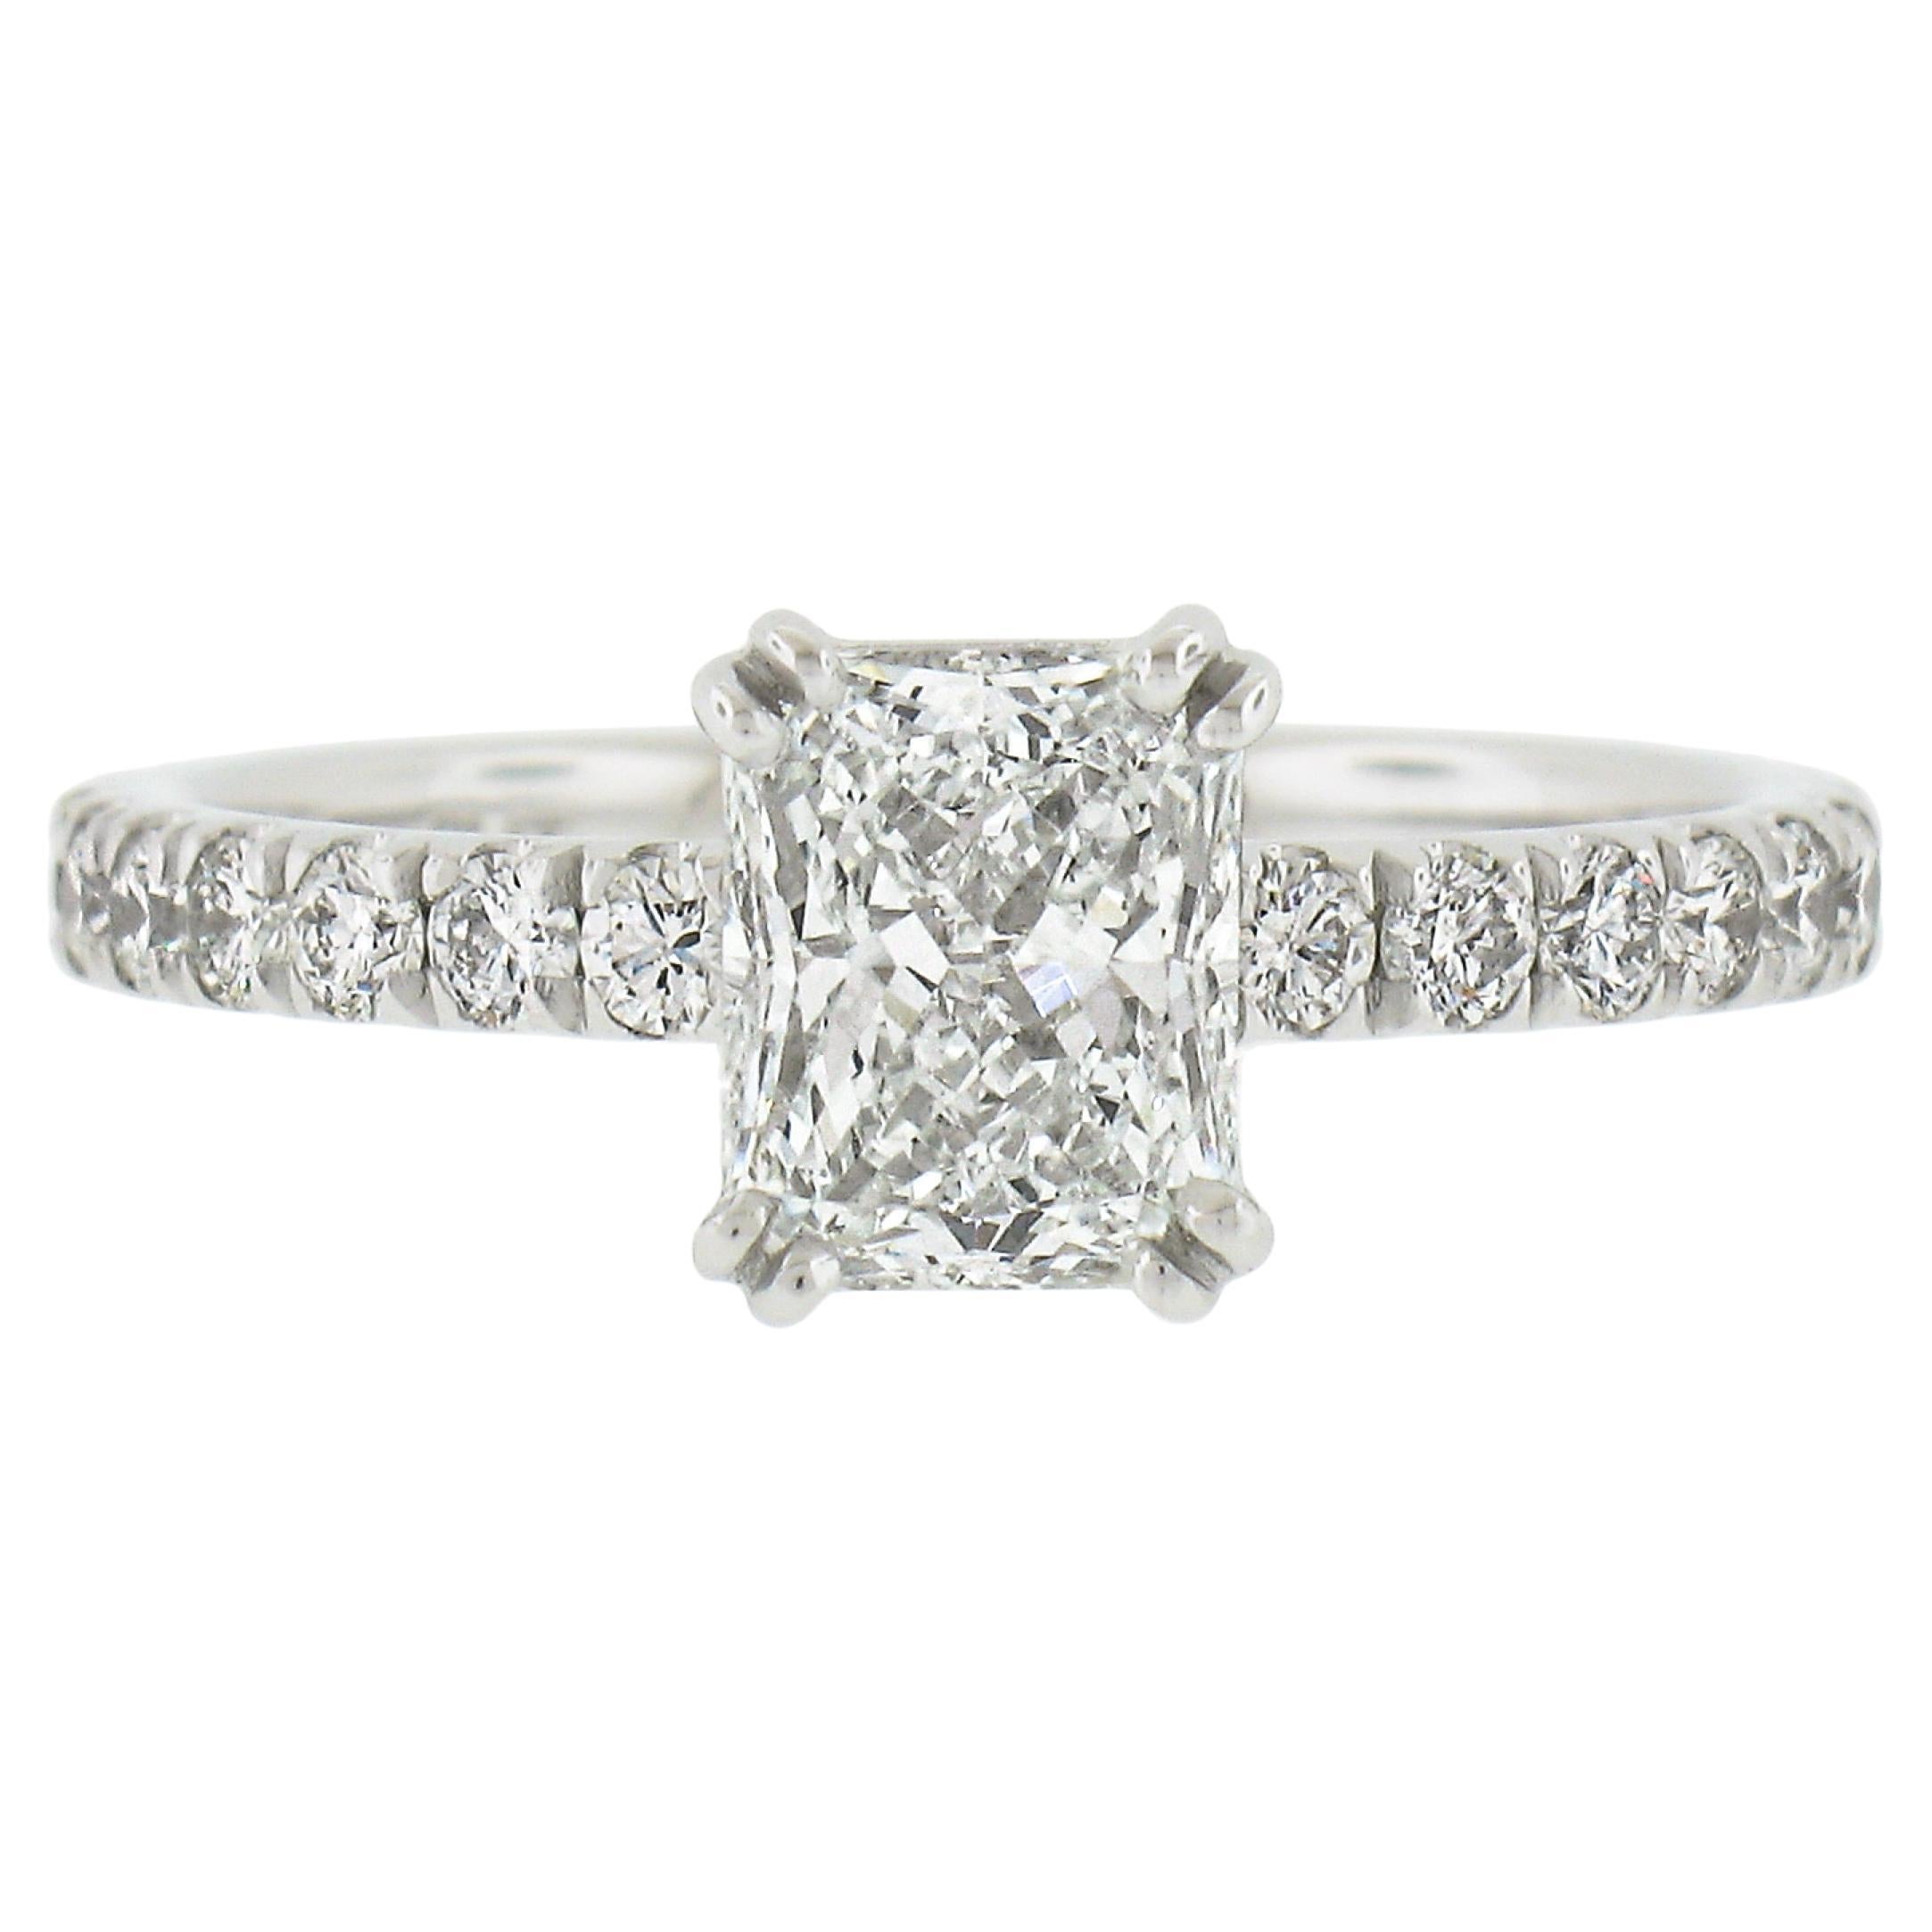 NEW Platinum GIA 1.54ctw Elongated Radiant Cut Diamond Solitaire Engagement Ring